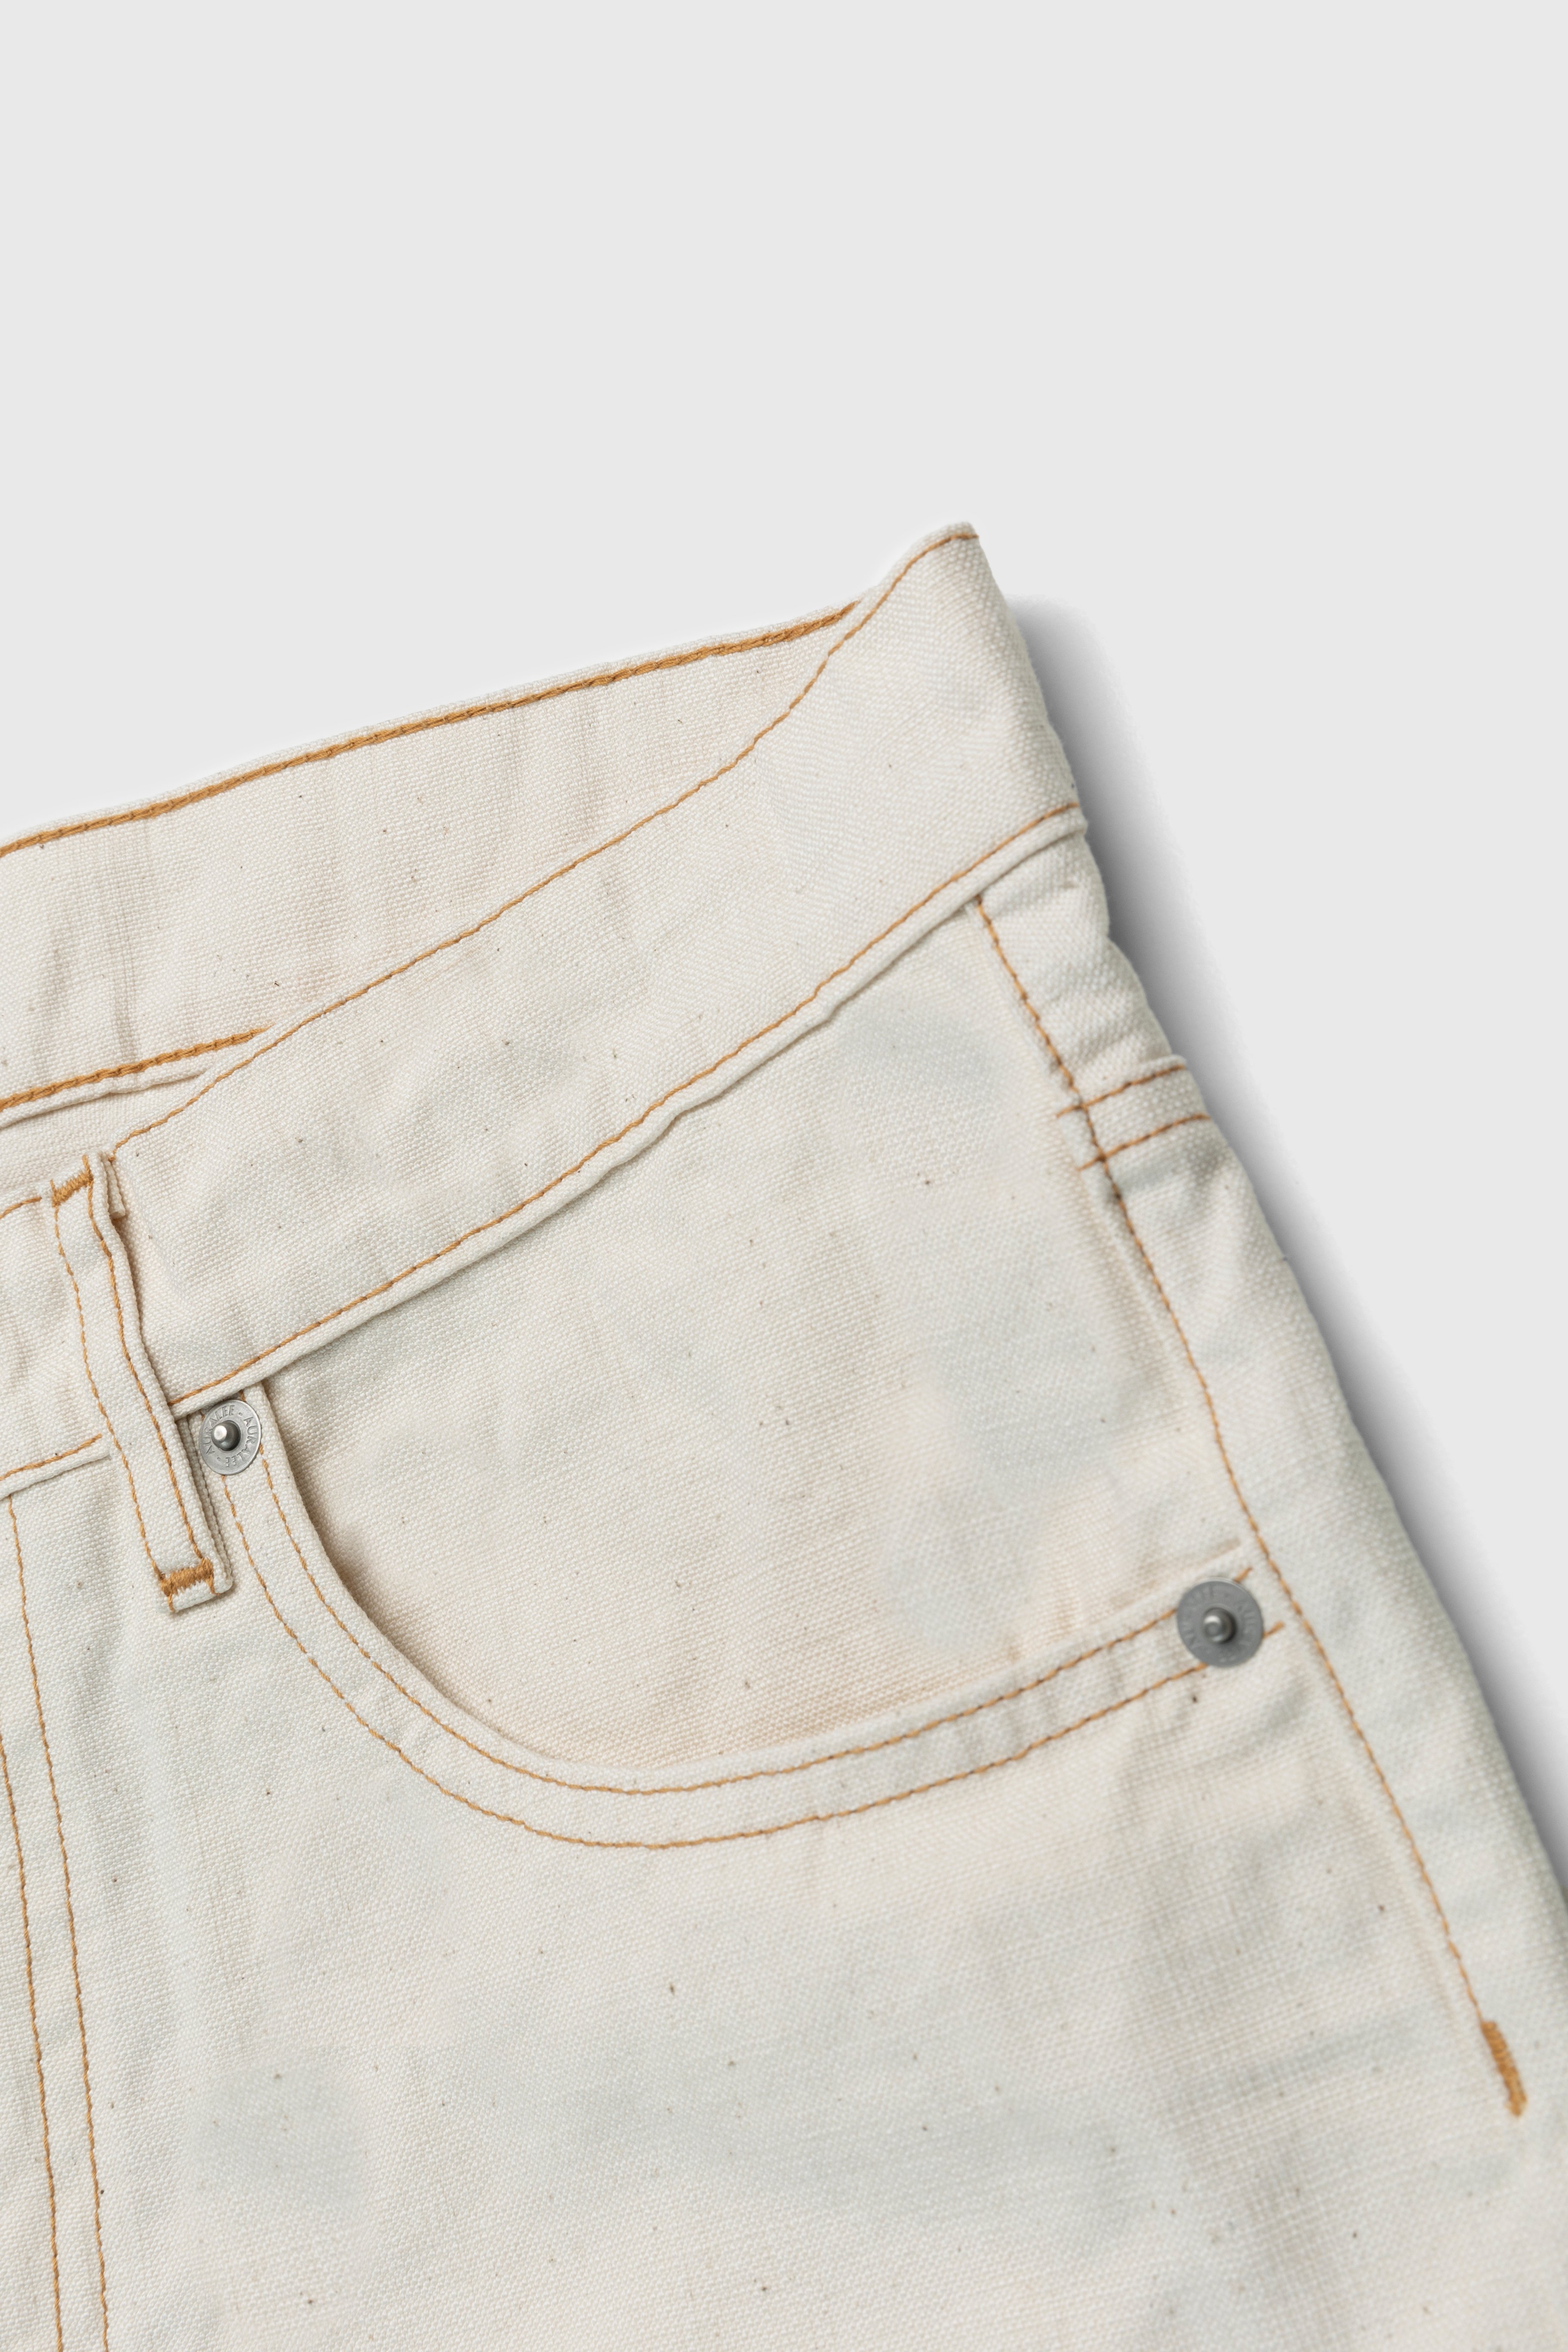 Auralee - Organic Undyed Cotton Pants Natural - Clothing - Beige - Image 5